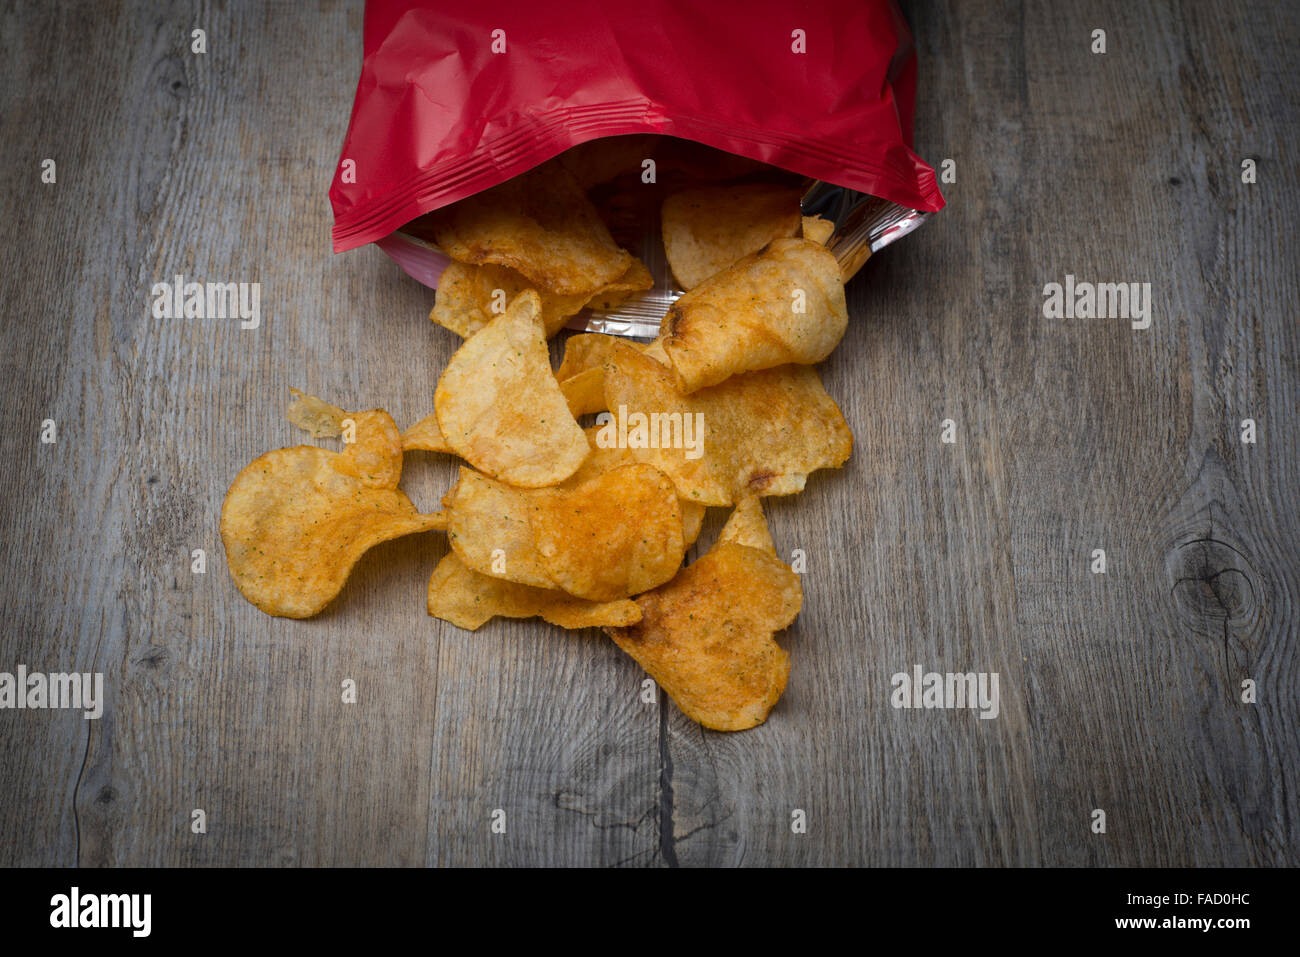 potato crisps and packet Stock Photo